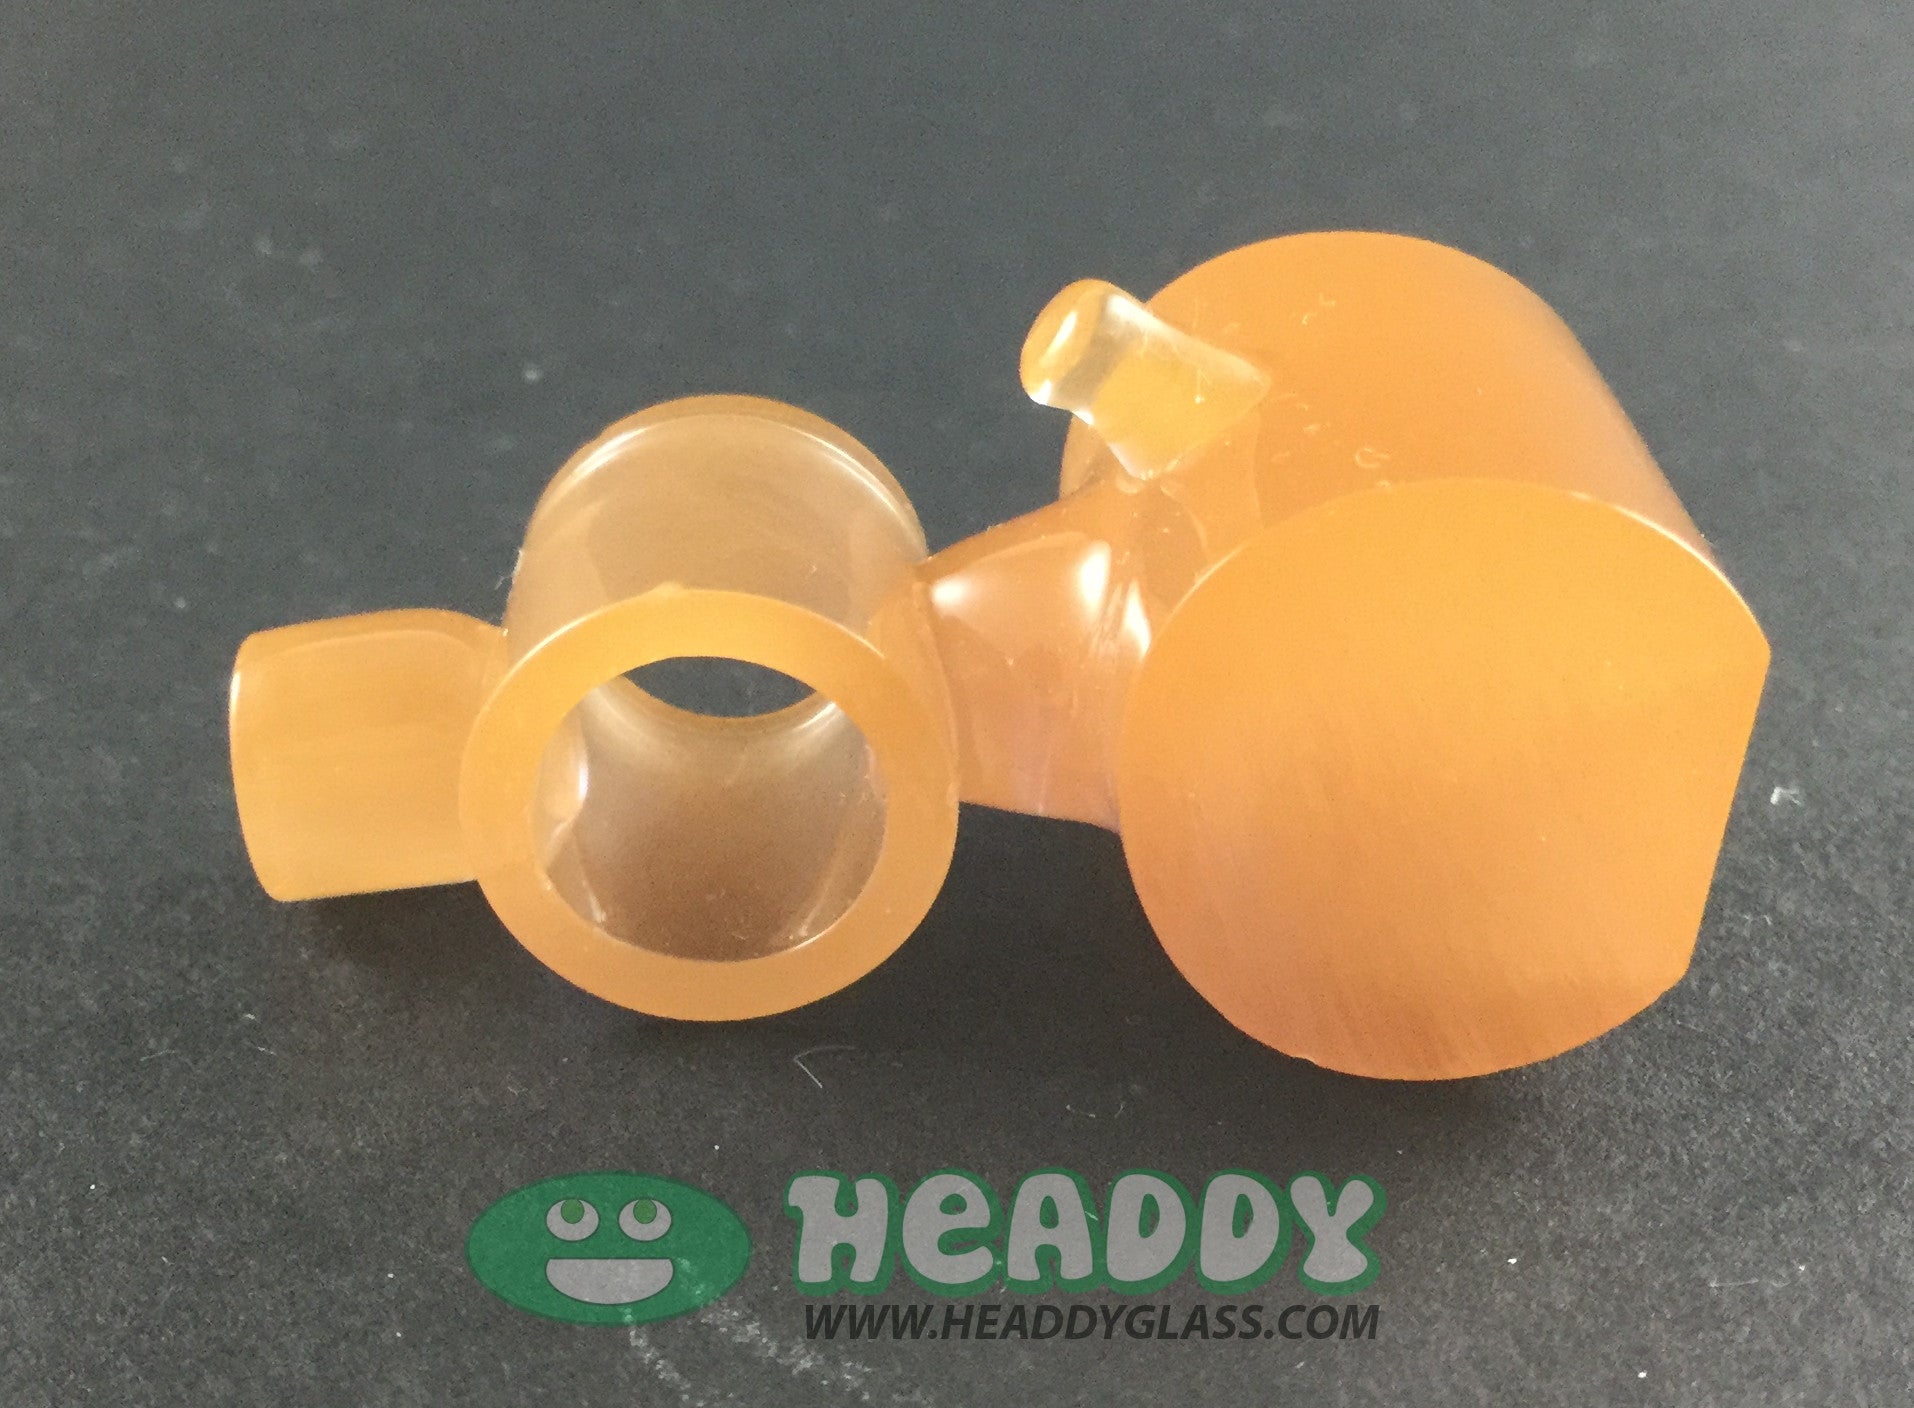 Shuhbuh shublet pendant - Headdy Glass - HG